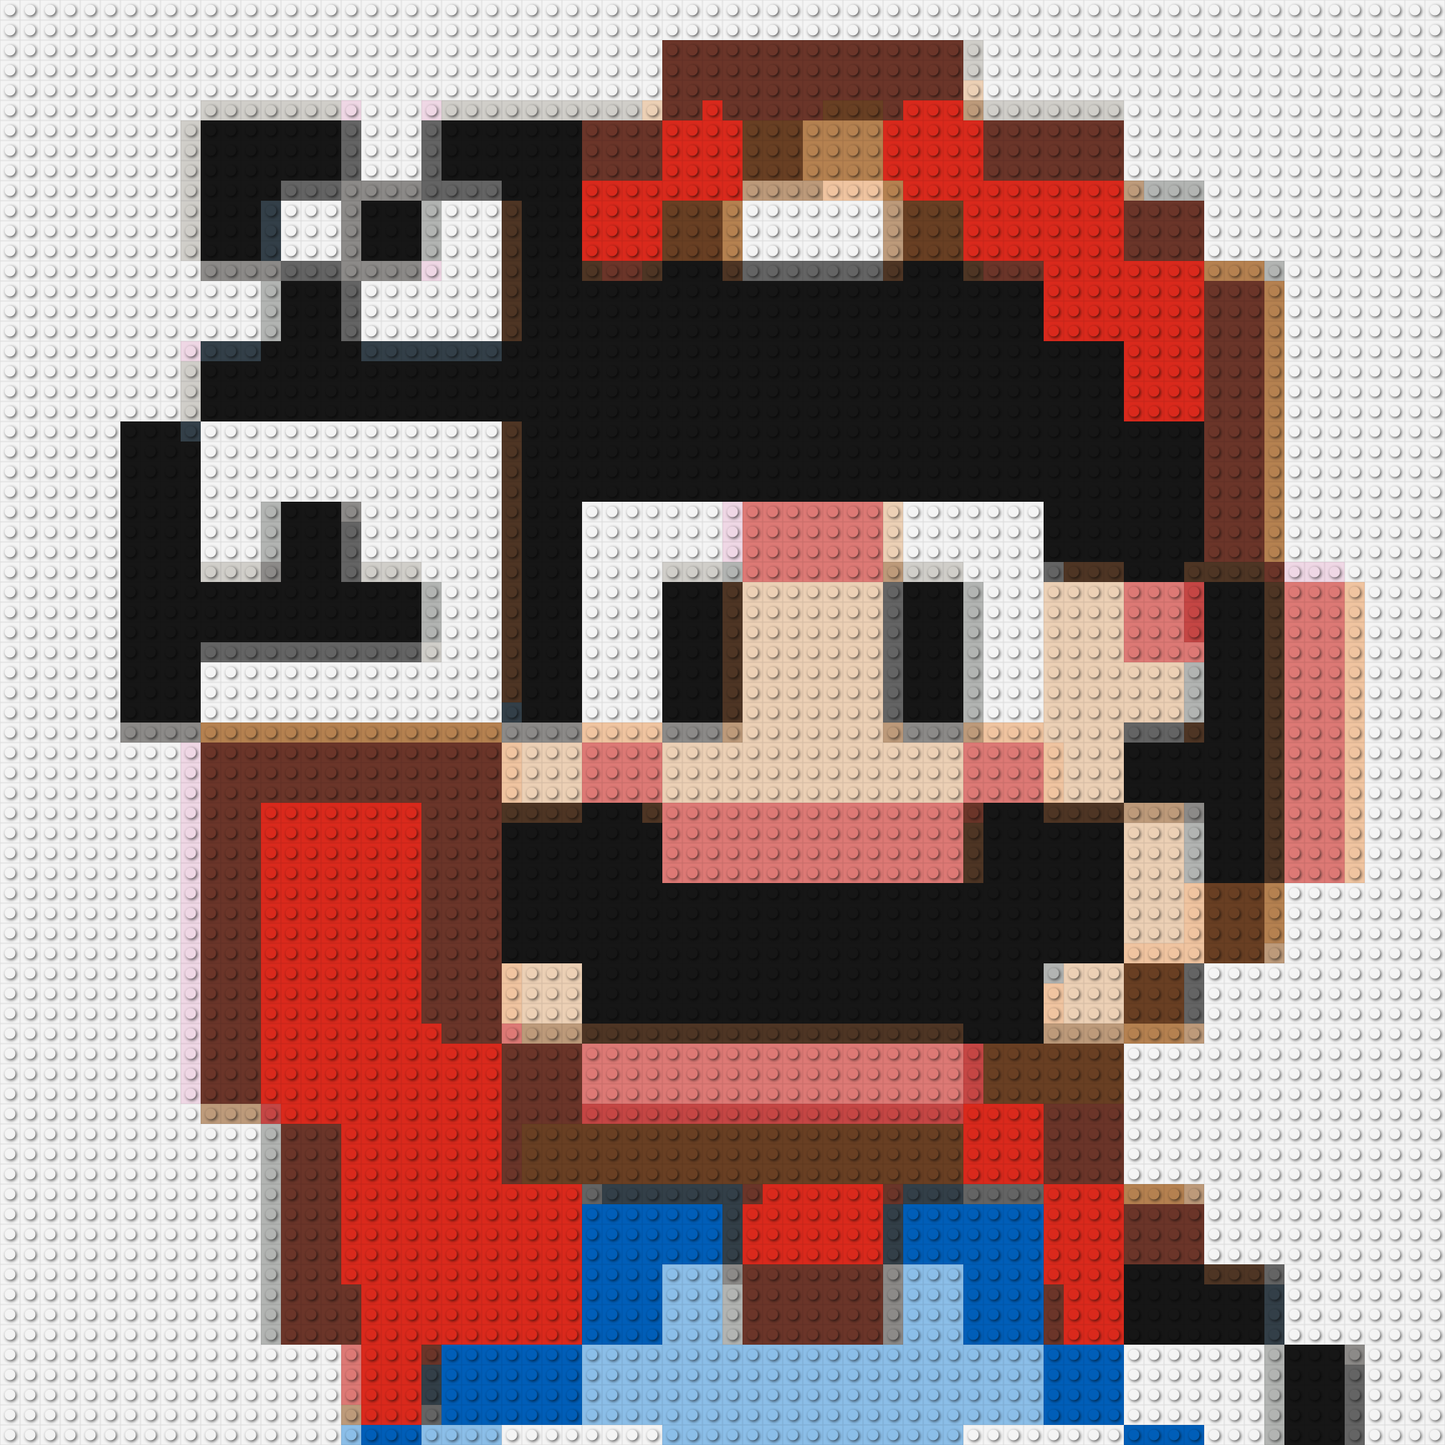 Mario Pixel Art - Brick Art Mosaic Kit